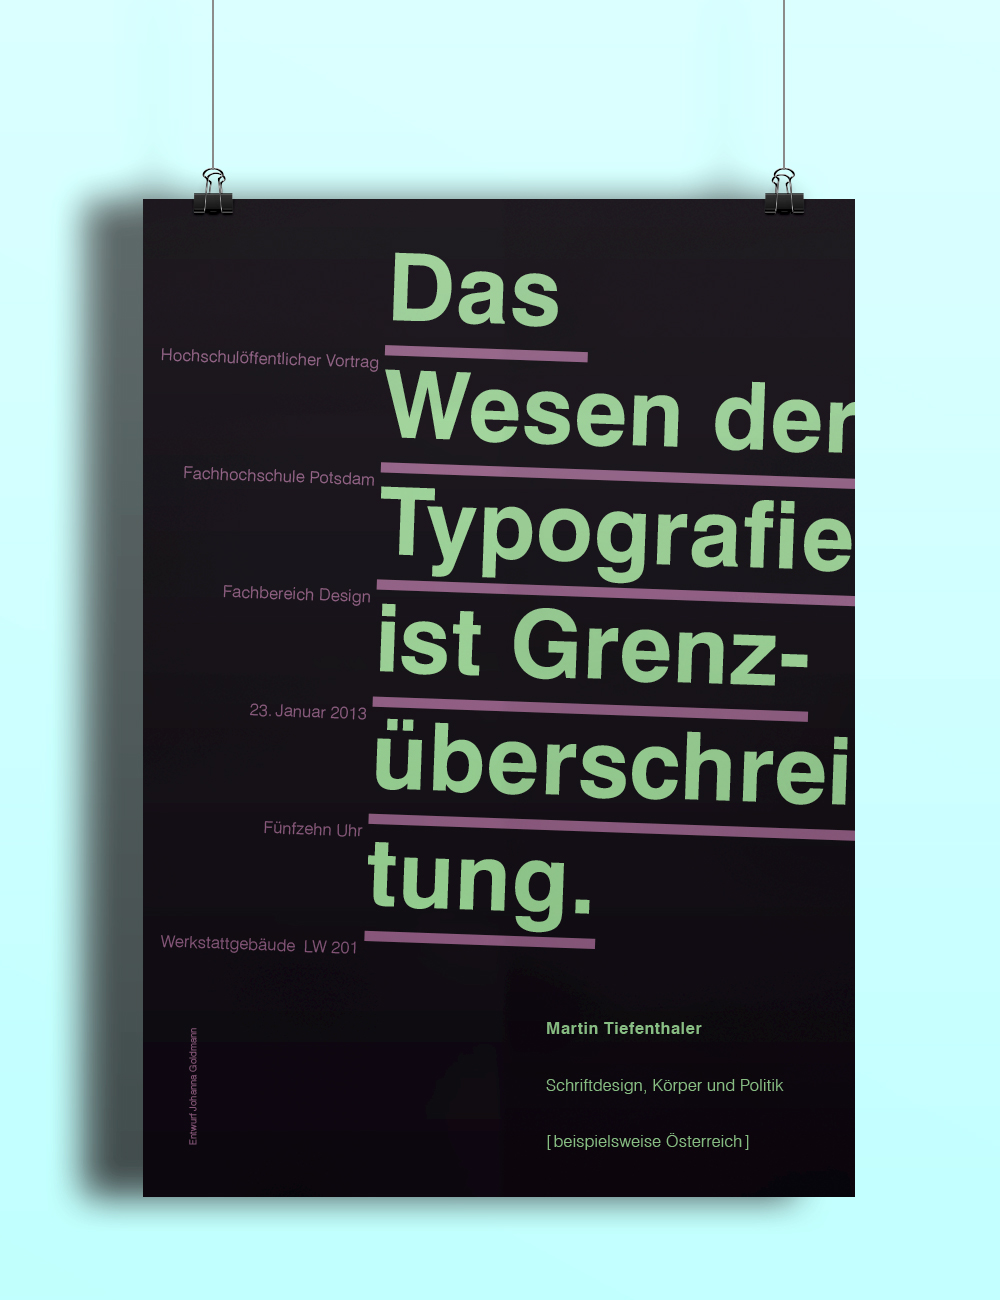 placards announcements  Typo  graphic design